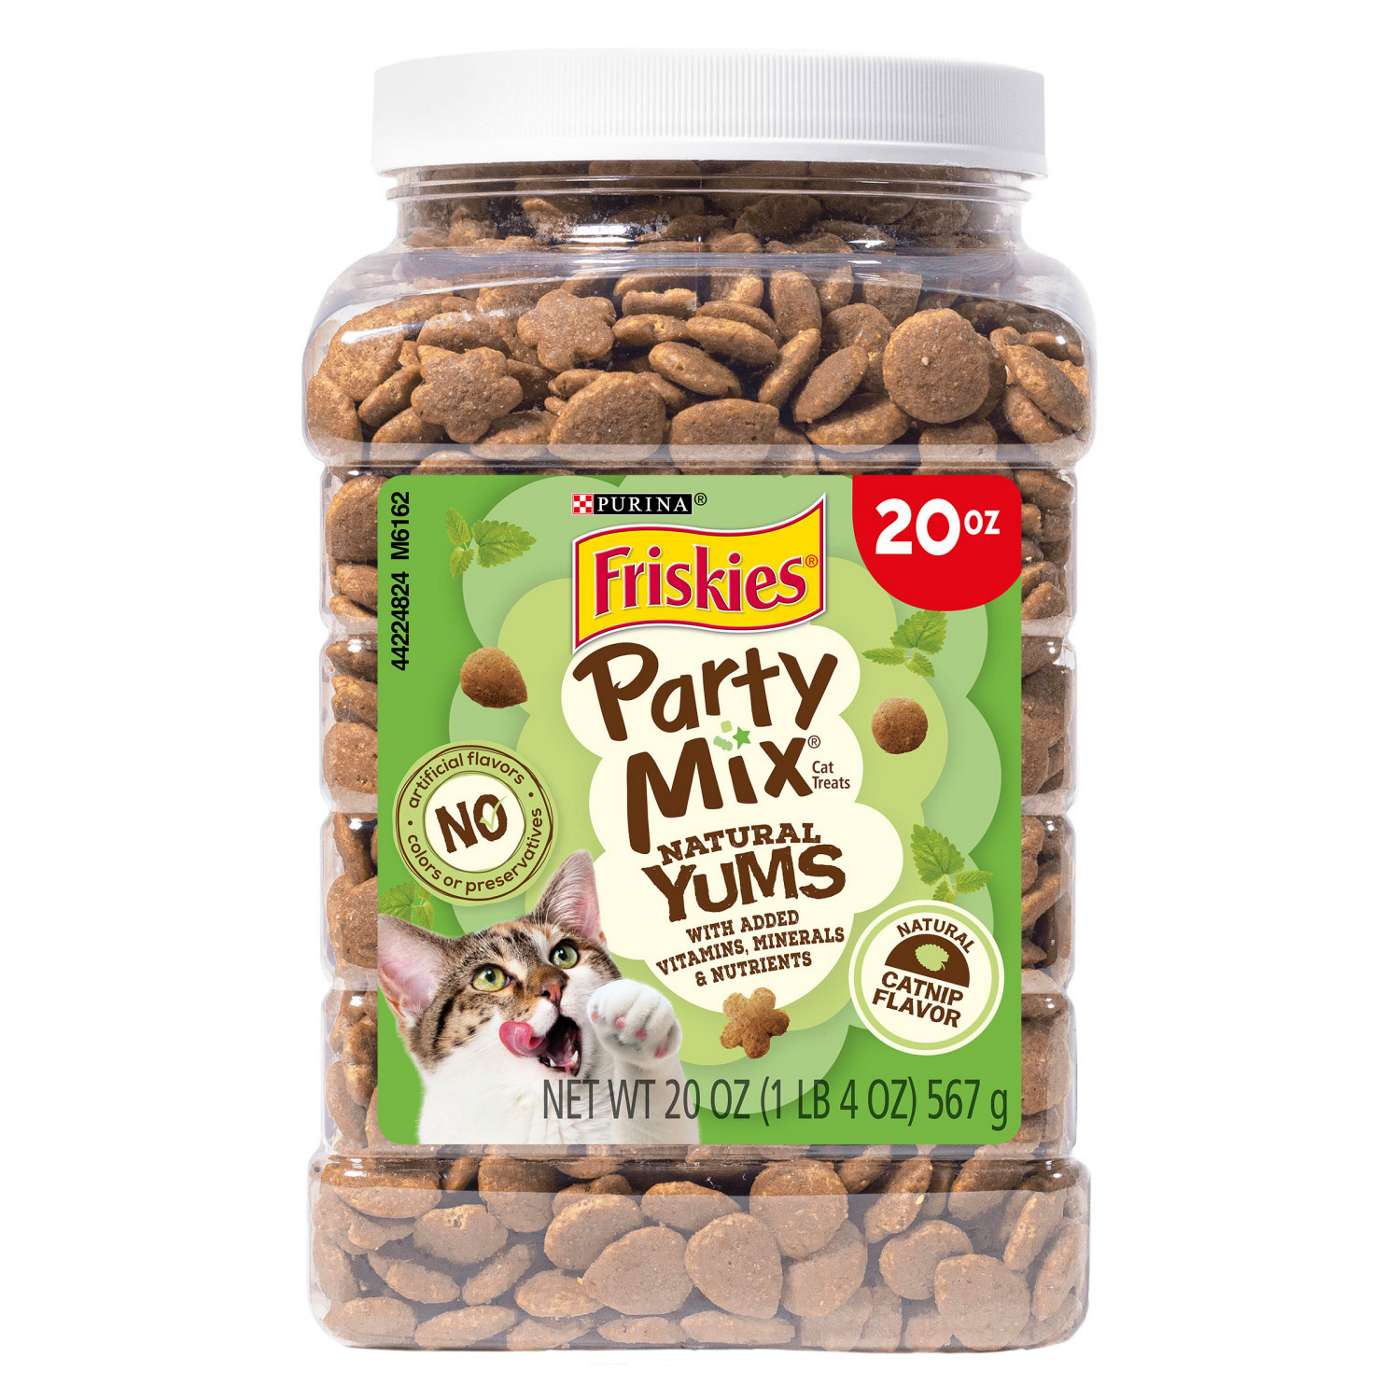 Friskies Purina Friskies Made in USA Facilities, Natural Cat Treats, Party Mix Natural Yums Catnip Flavor; image 1 of 7